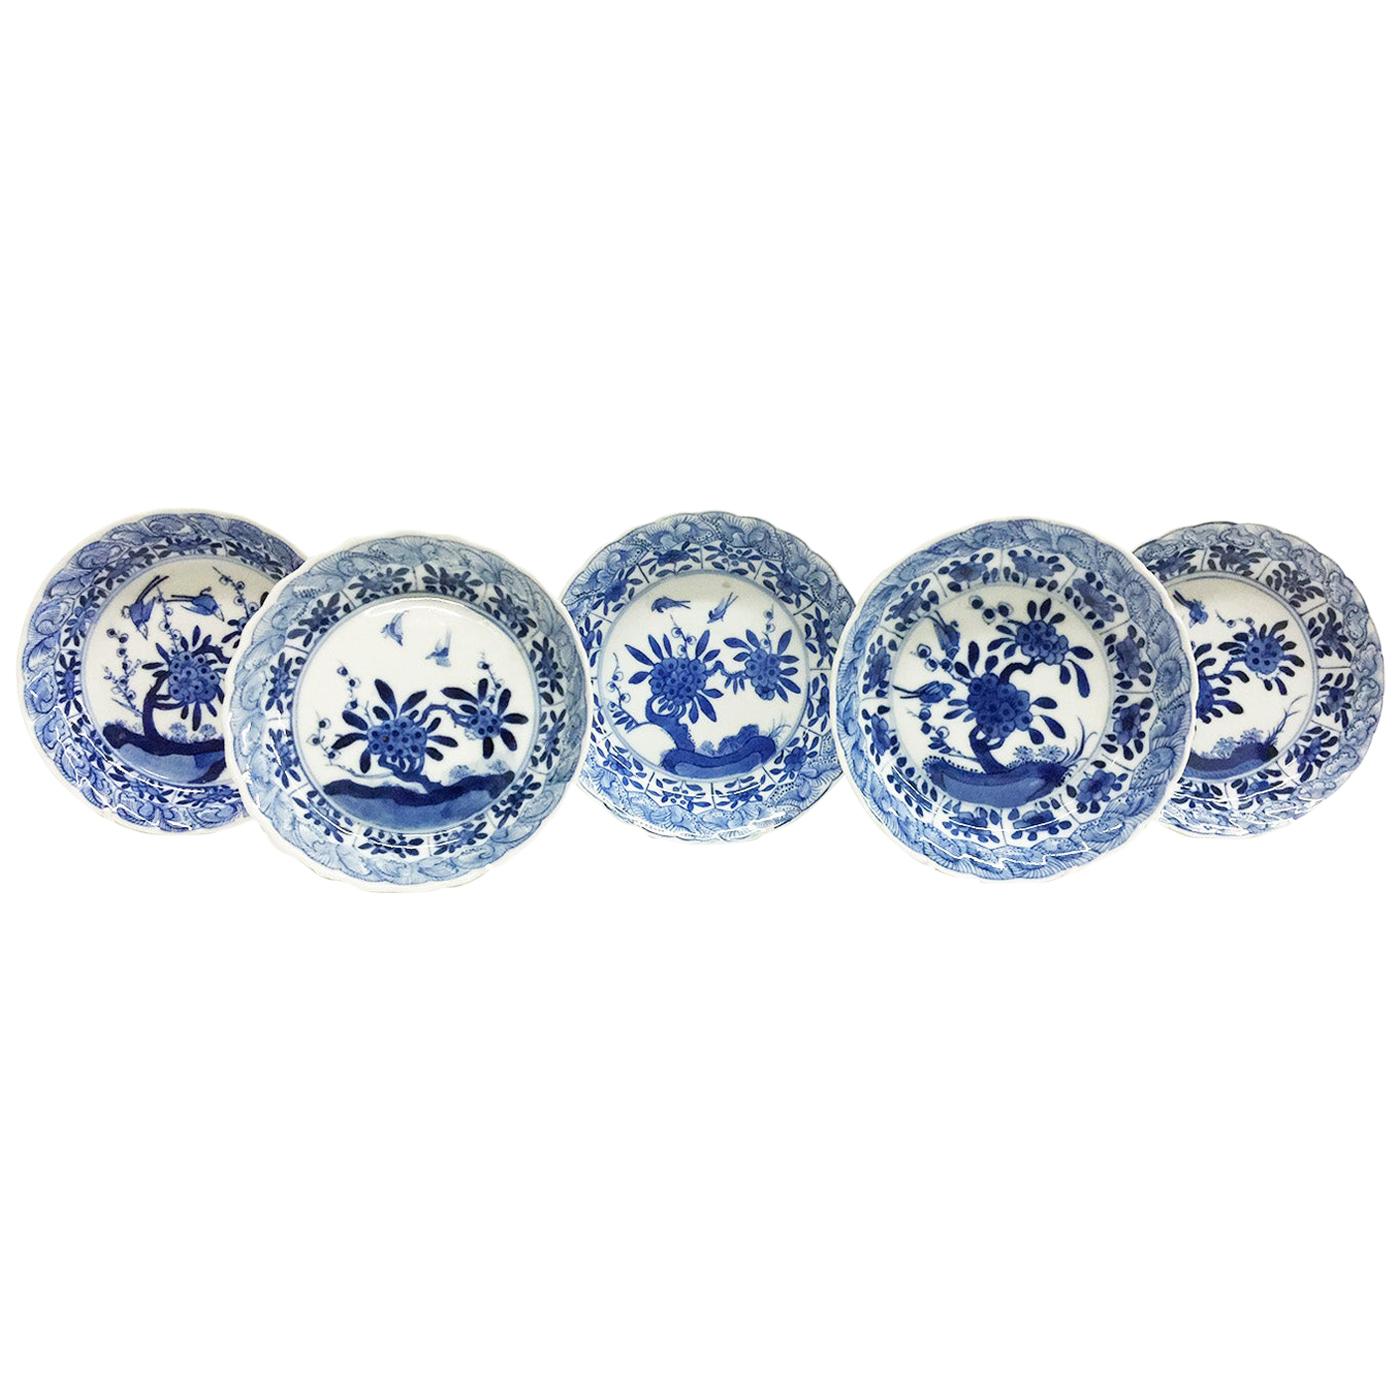 Antique Chinese Export Porcelain Plates, Kangxi, 1662-1722